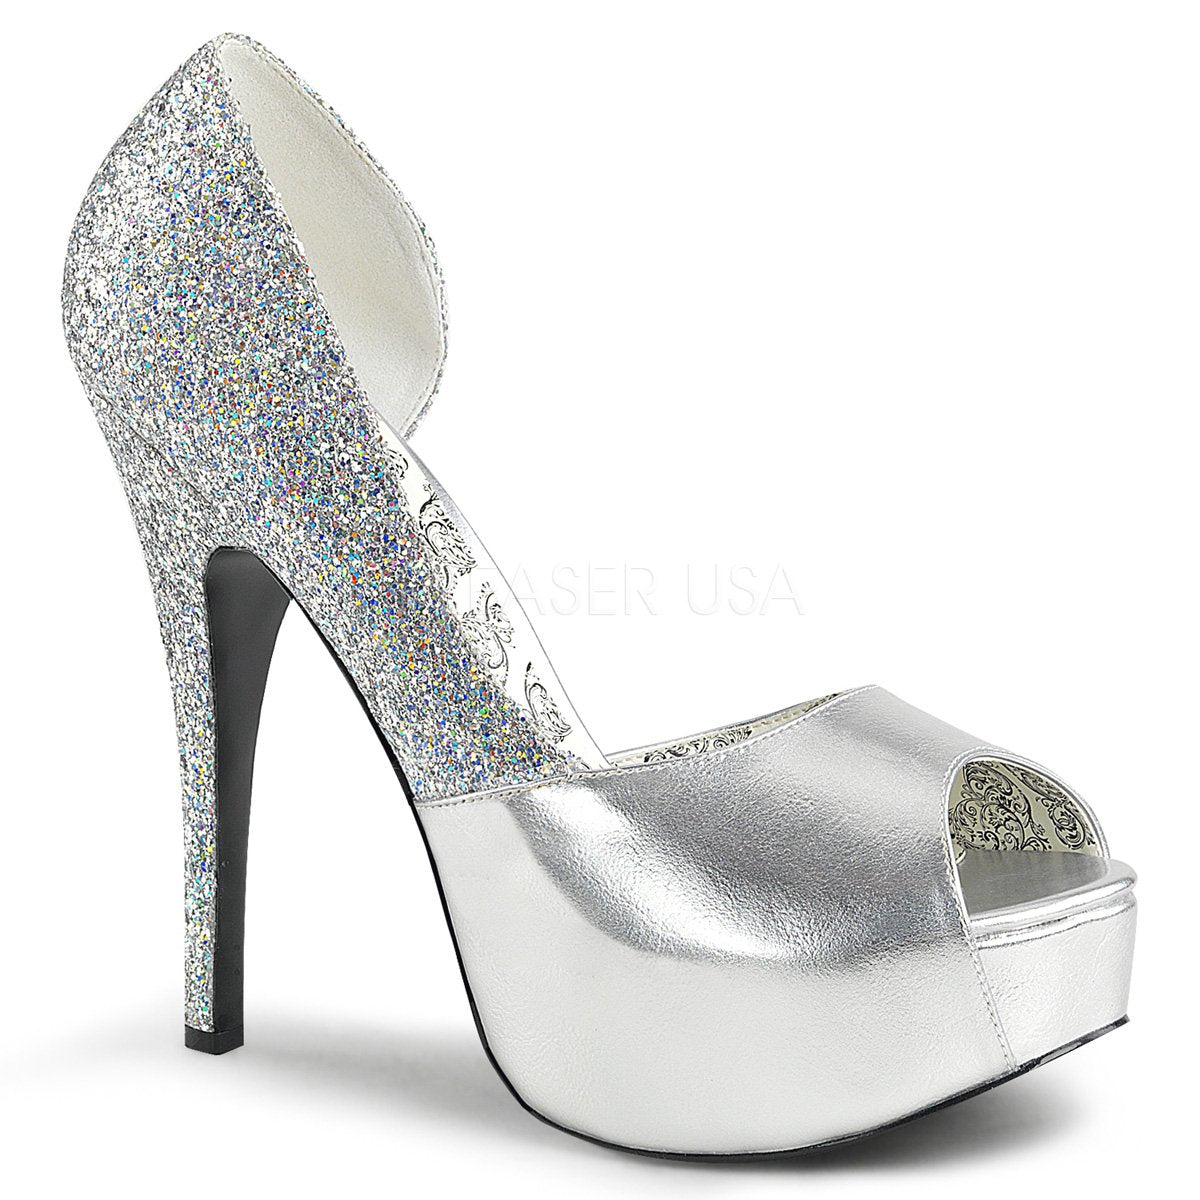 Rhinestone High Heel Sandals Thin Heels Pointed Toe Bridal Wedding Shoes  Plus Size Women Sandals From Loveme3878, $37.69 | DHgate.Com